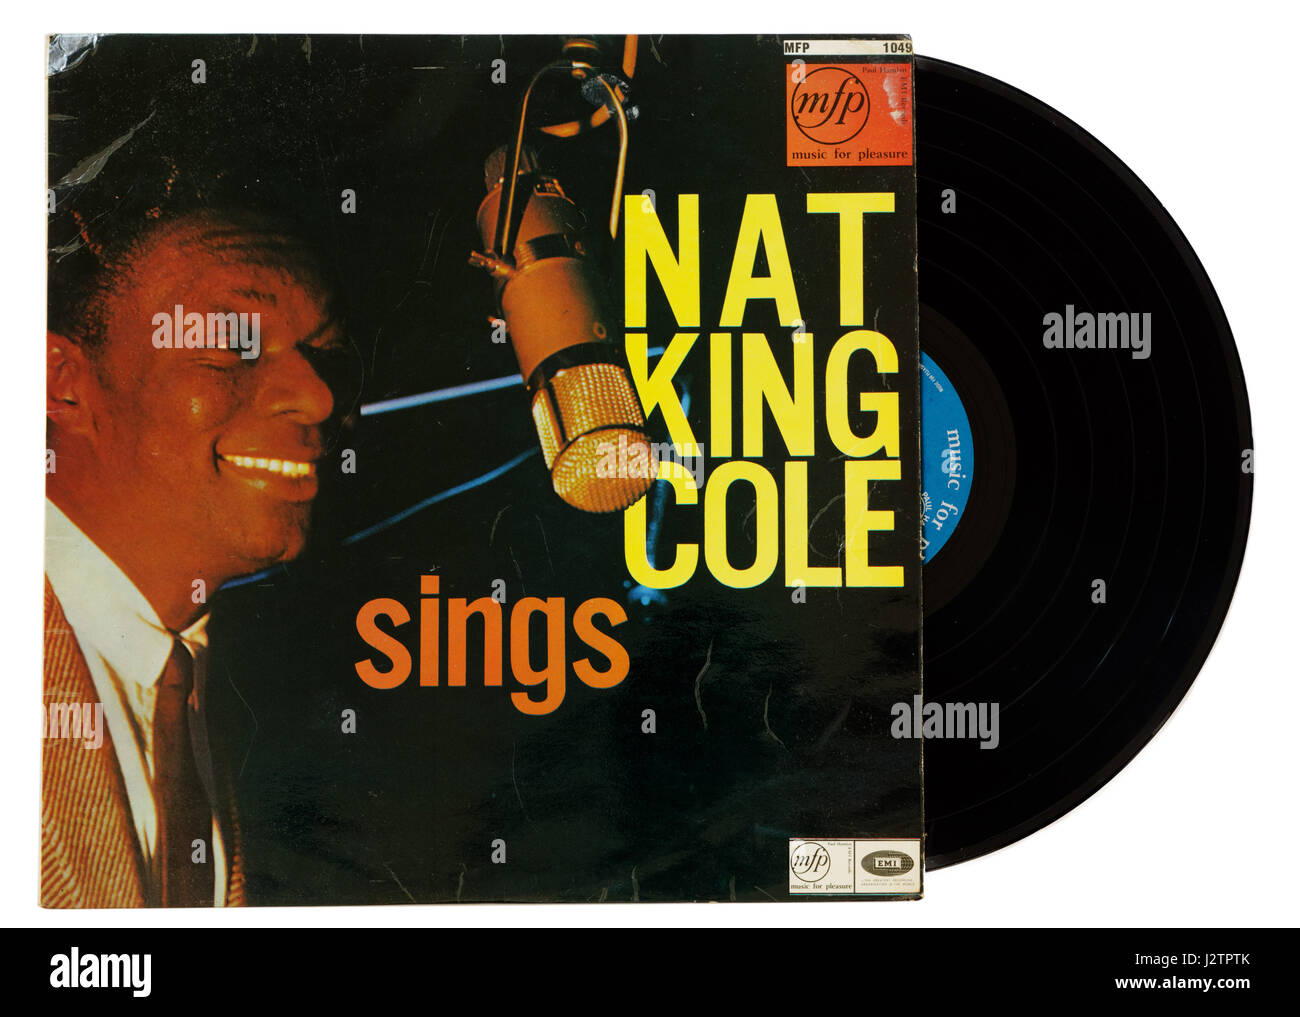 Nat King Cole album Sings on vinyl Stock Photo